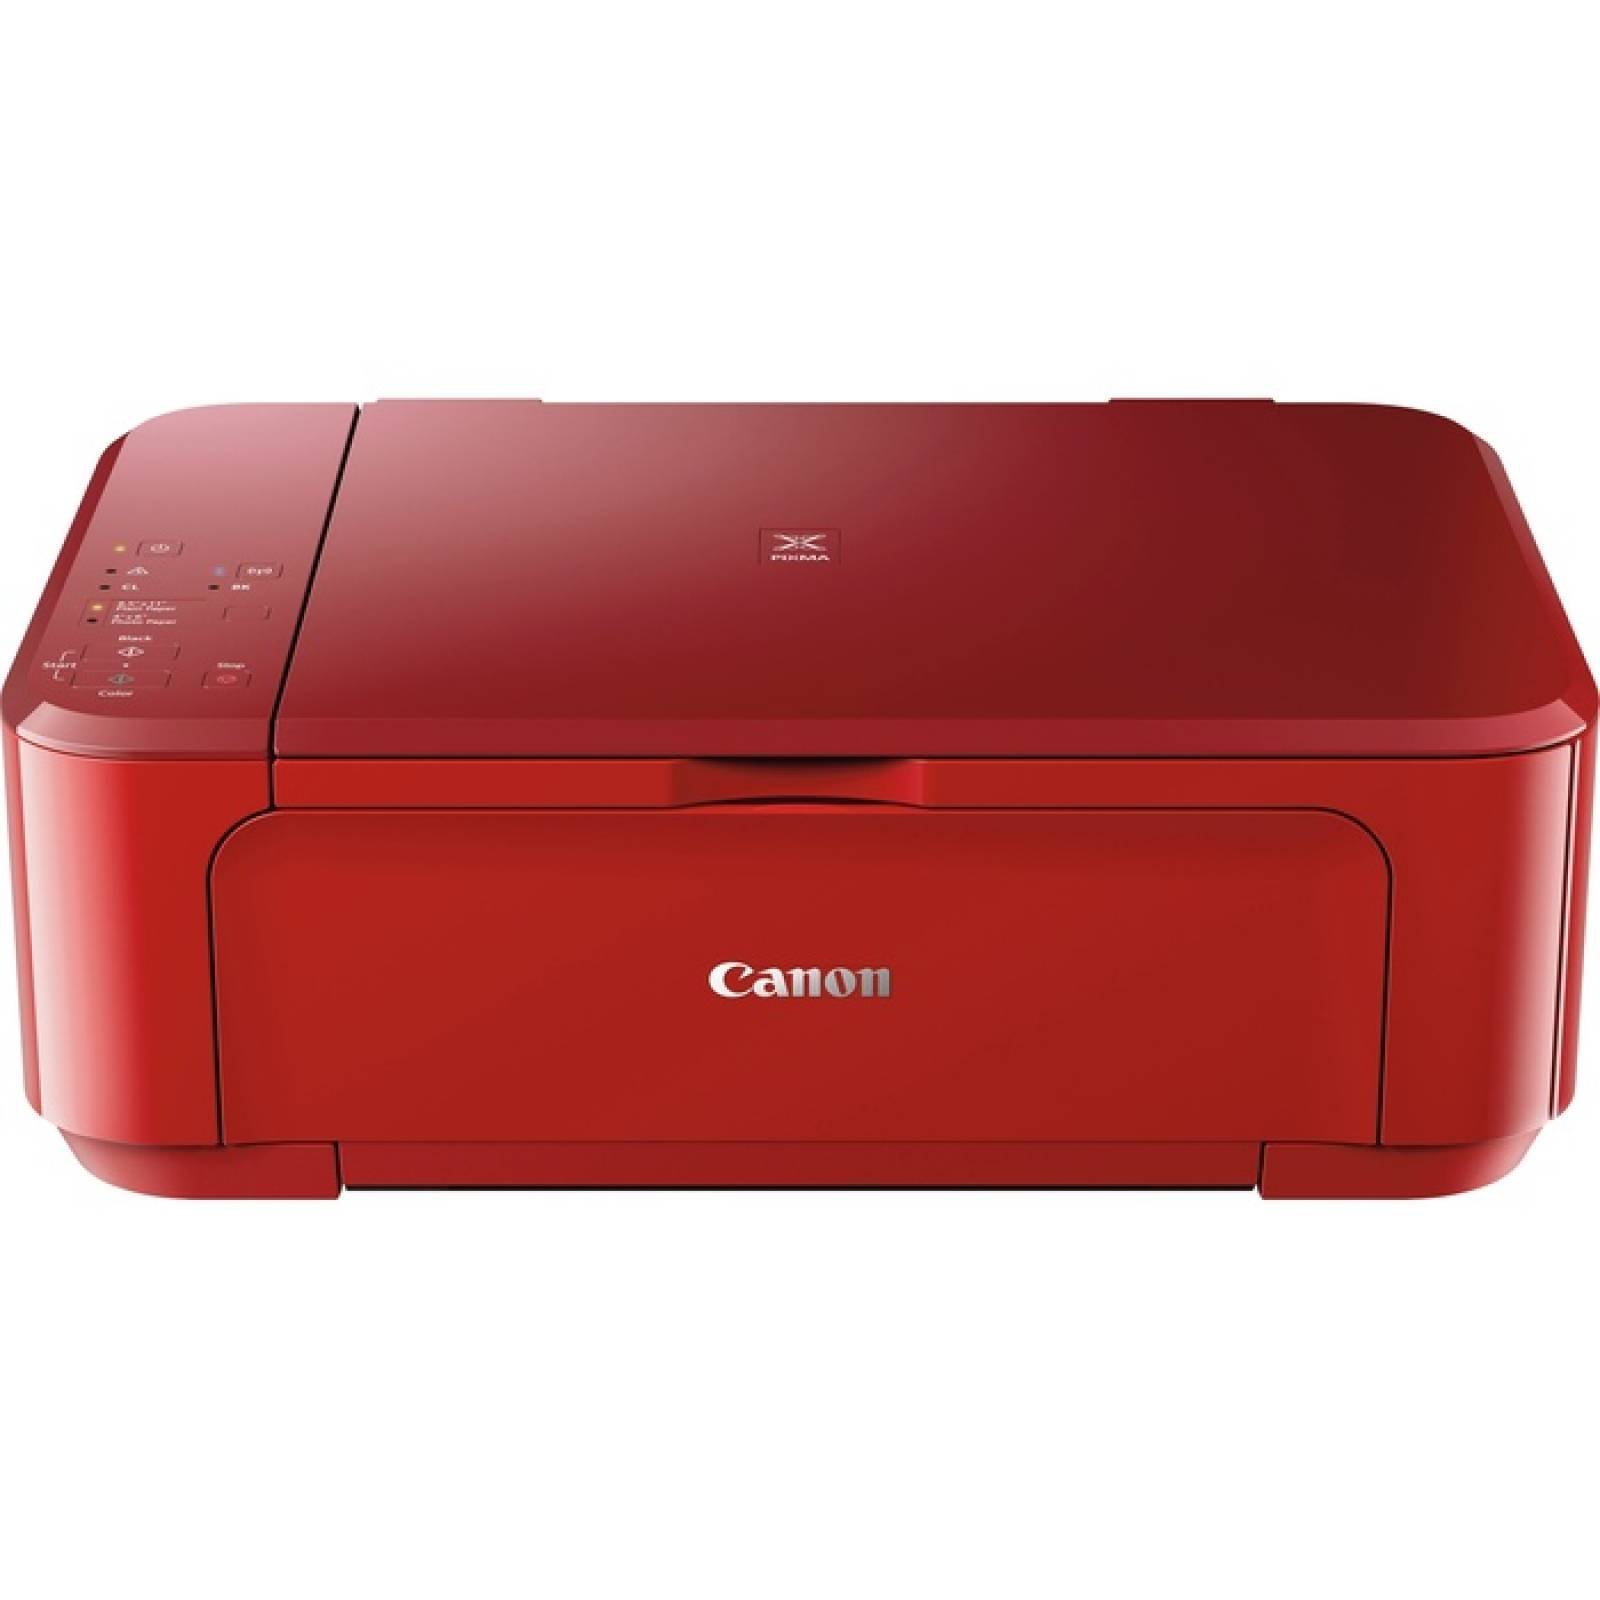 Impresora multifuncin de inyeccin de tinta PIXMA MG3620 de Canon  Color  Impresin fotogrfica  Escritorio